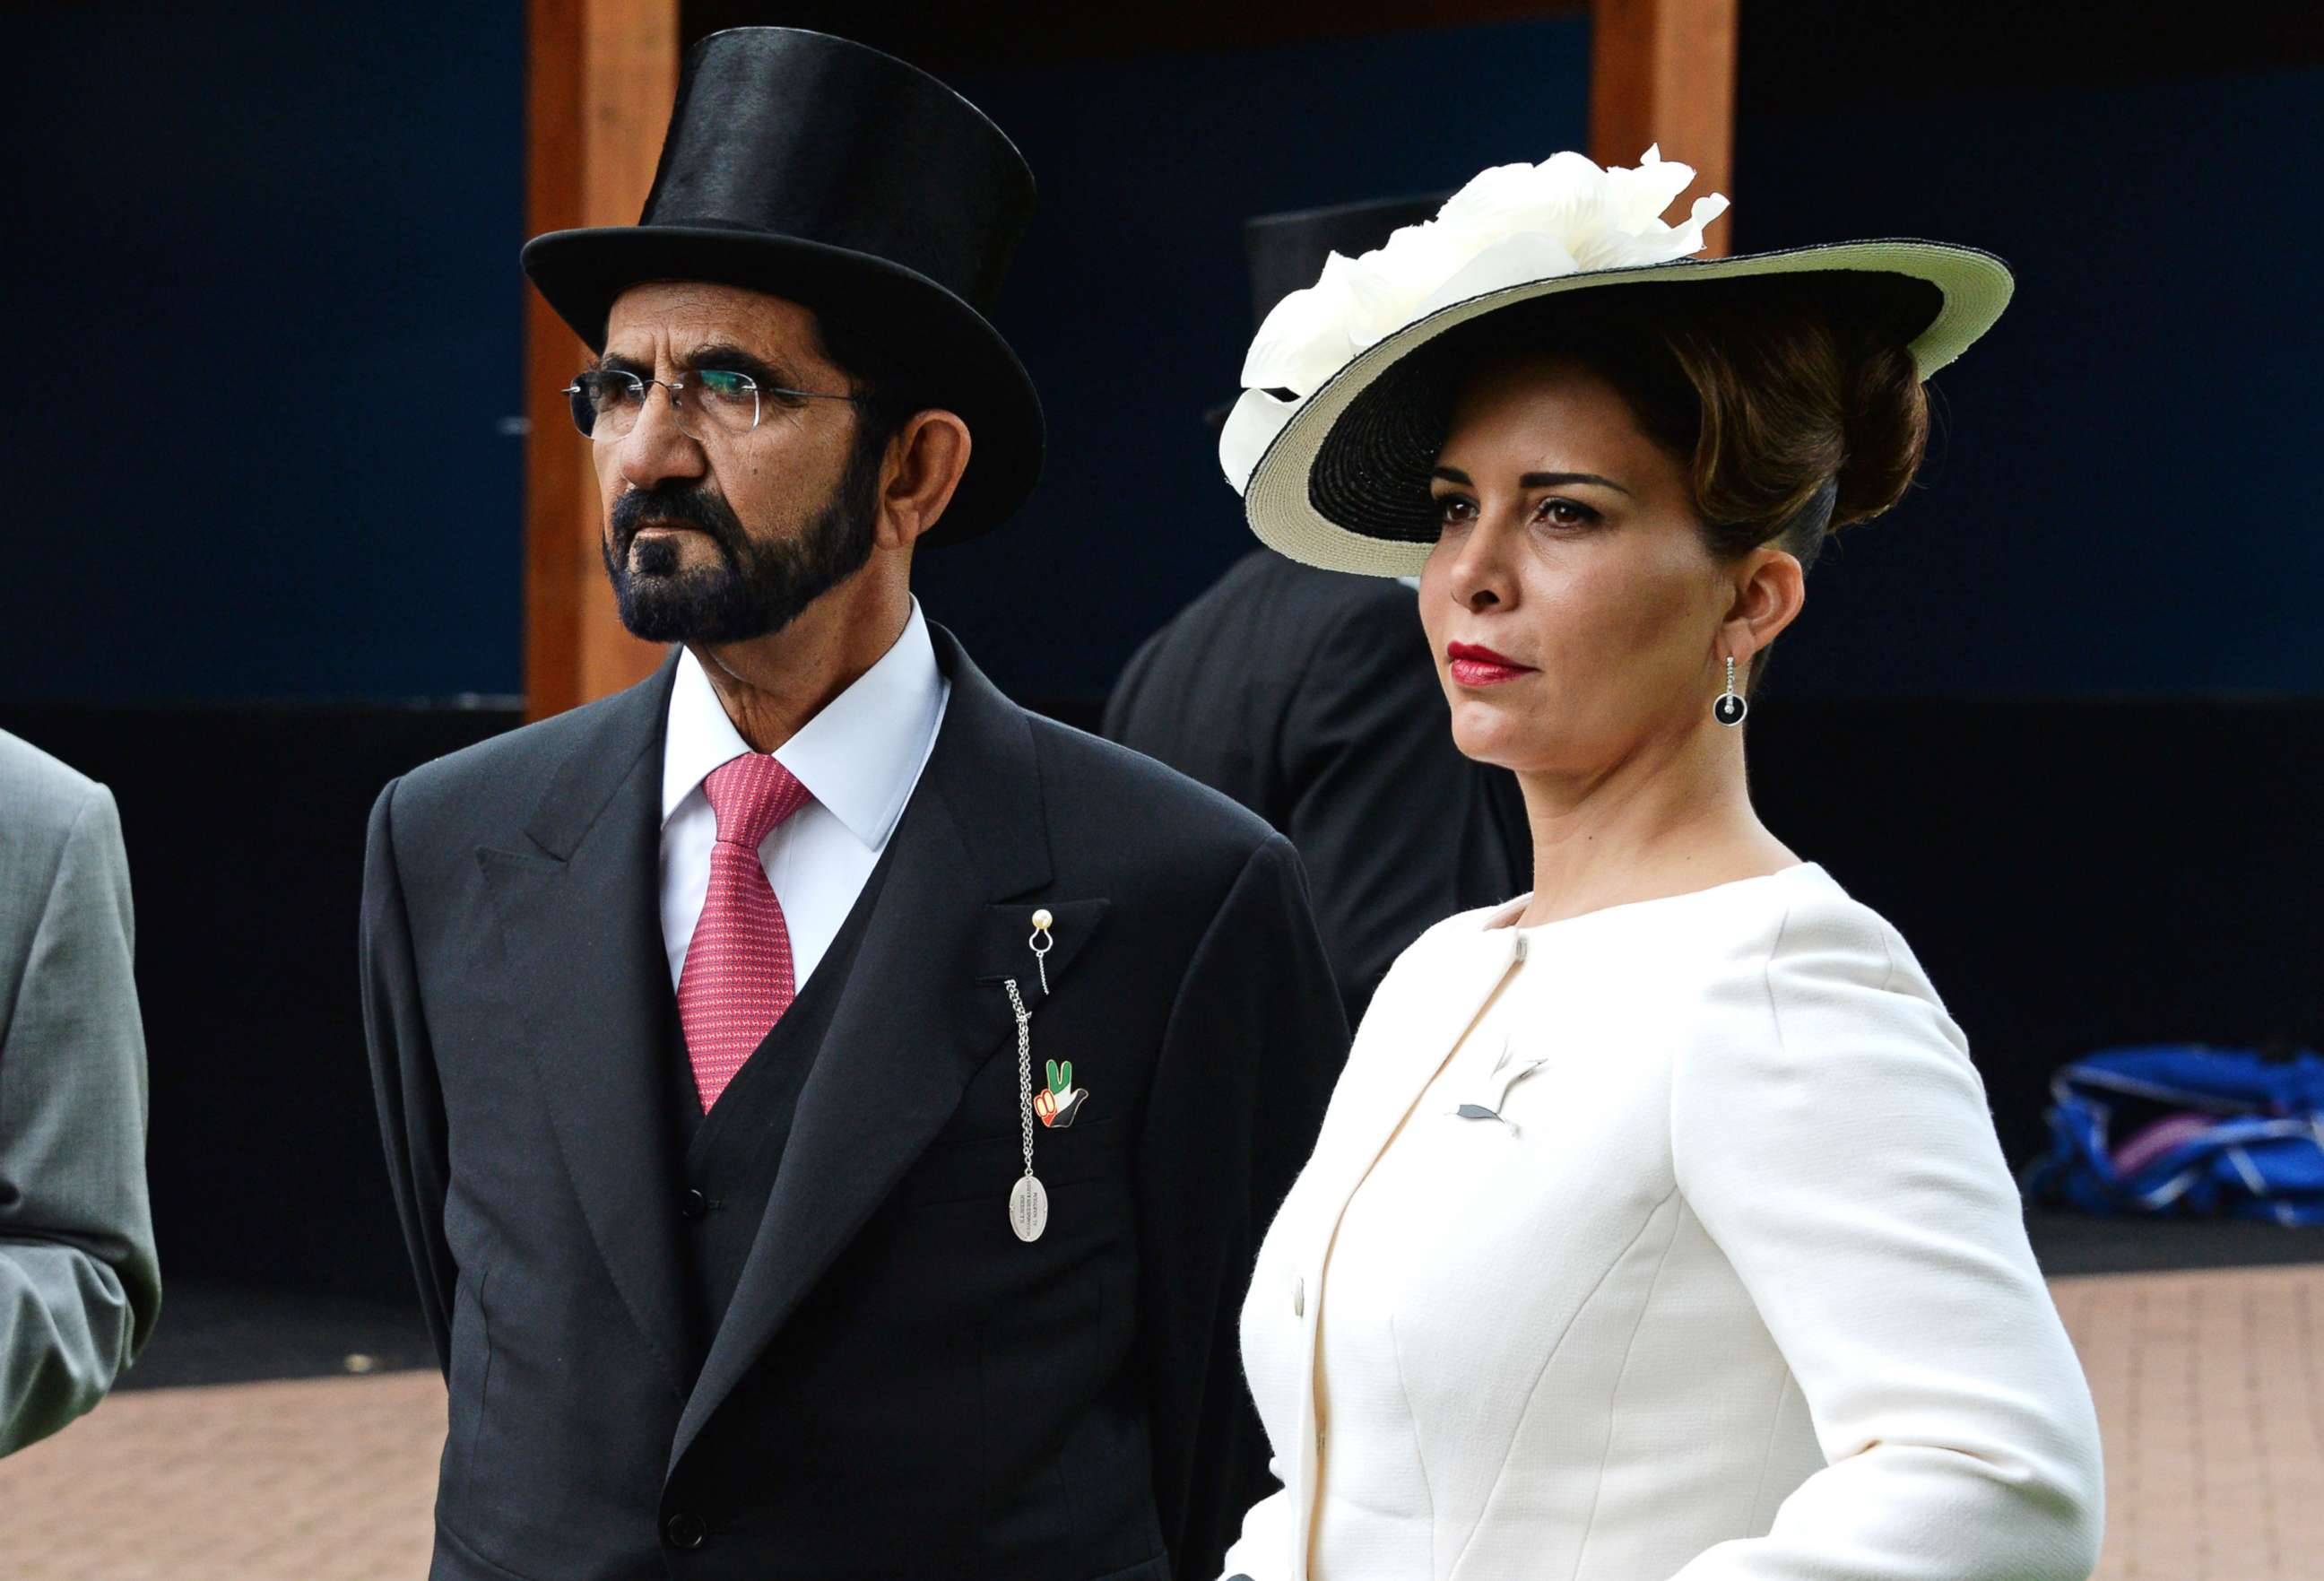 PHOTO: Sheikh Mohammed bin Rashid Al Maktoum, left, and Princess Haya bint Al Hussein attend an event in London, June 4, 2016.